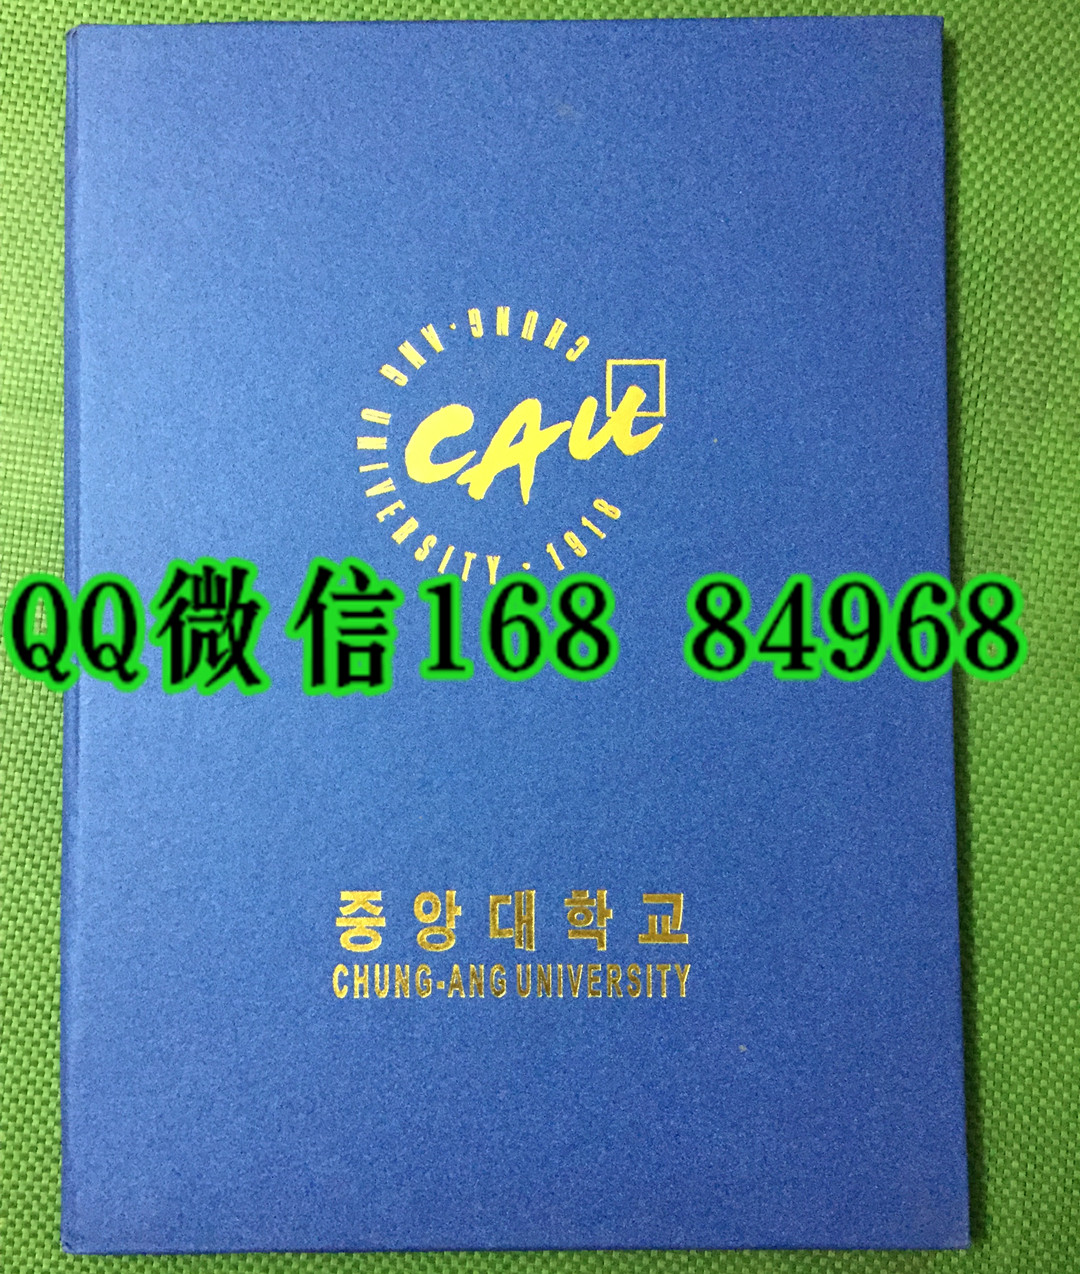 韩国中央大学毕业证外壳复制，chung ang university diploma Cover